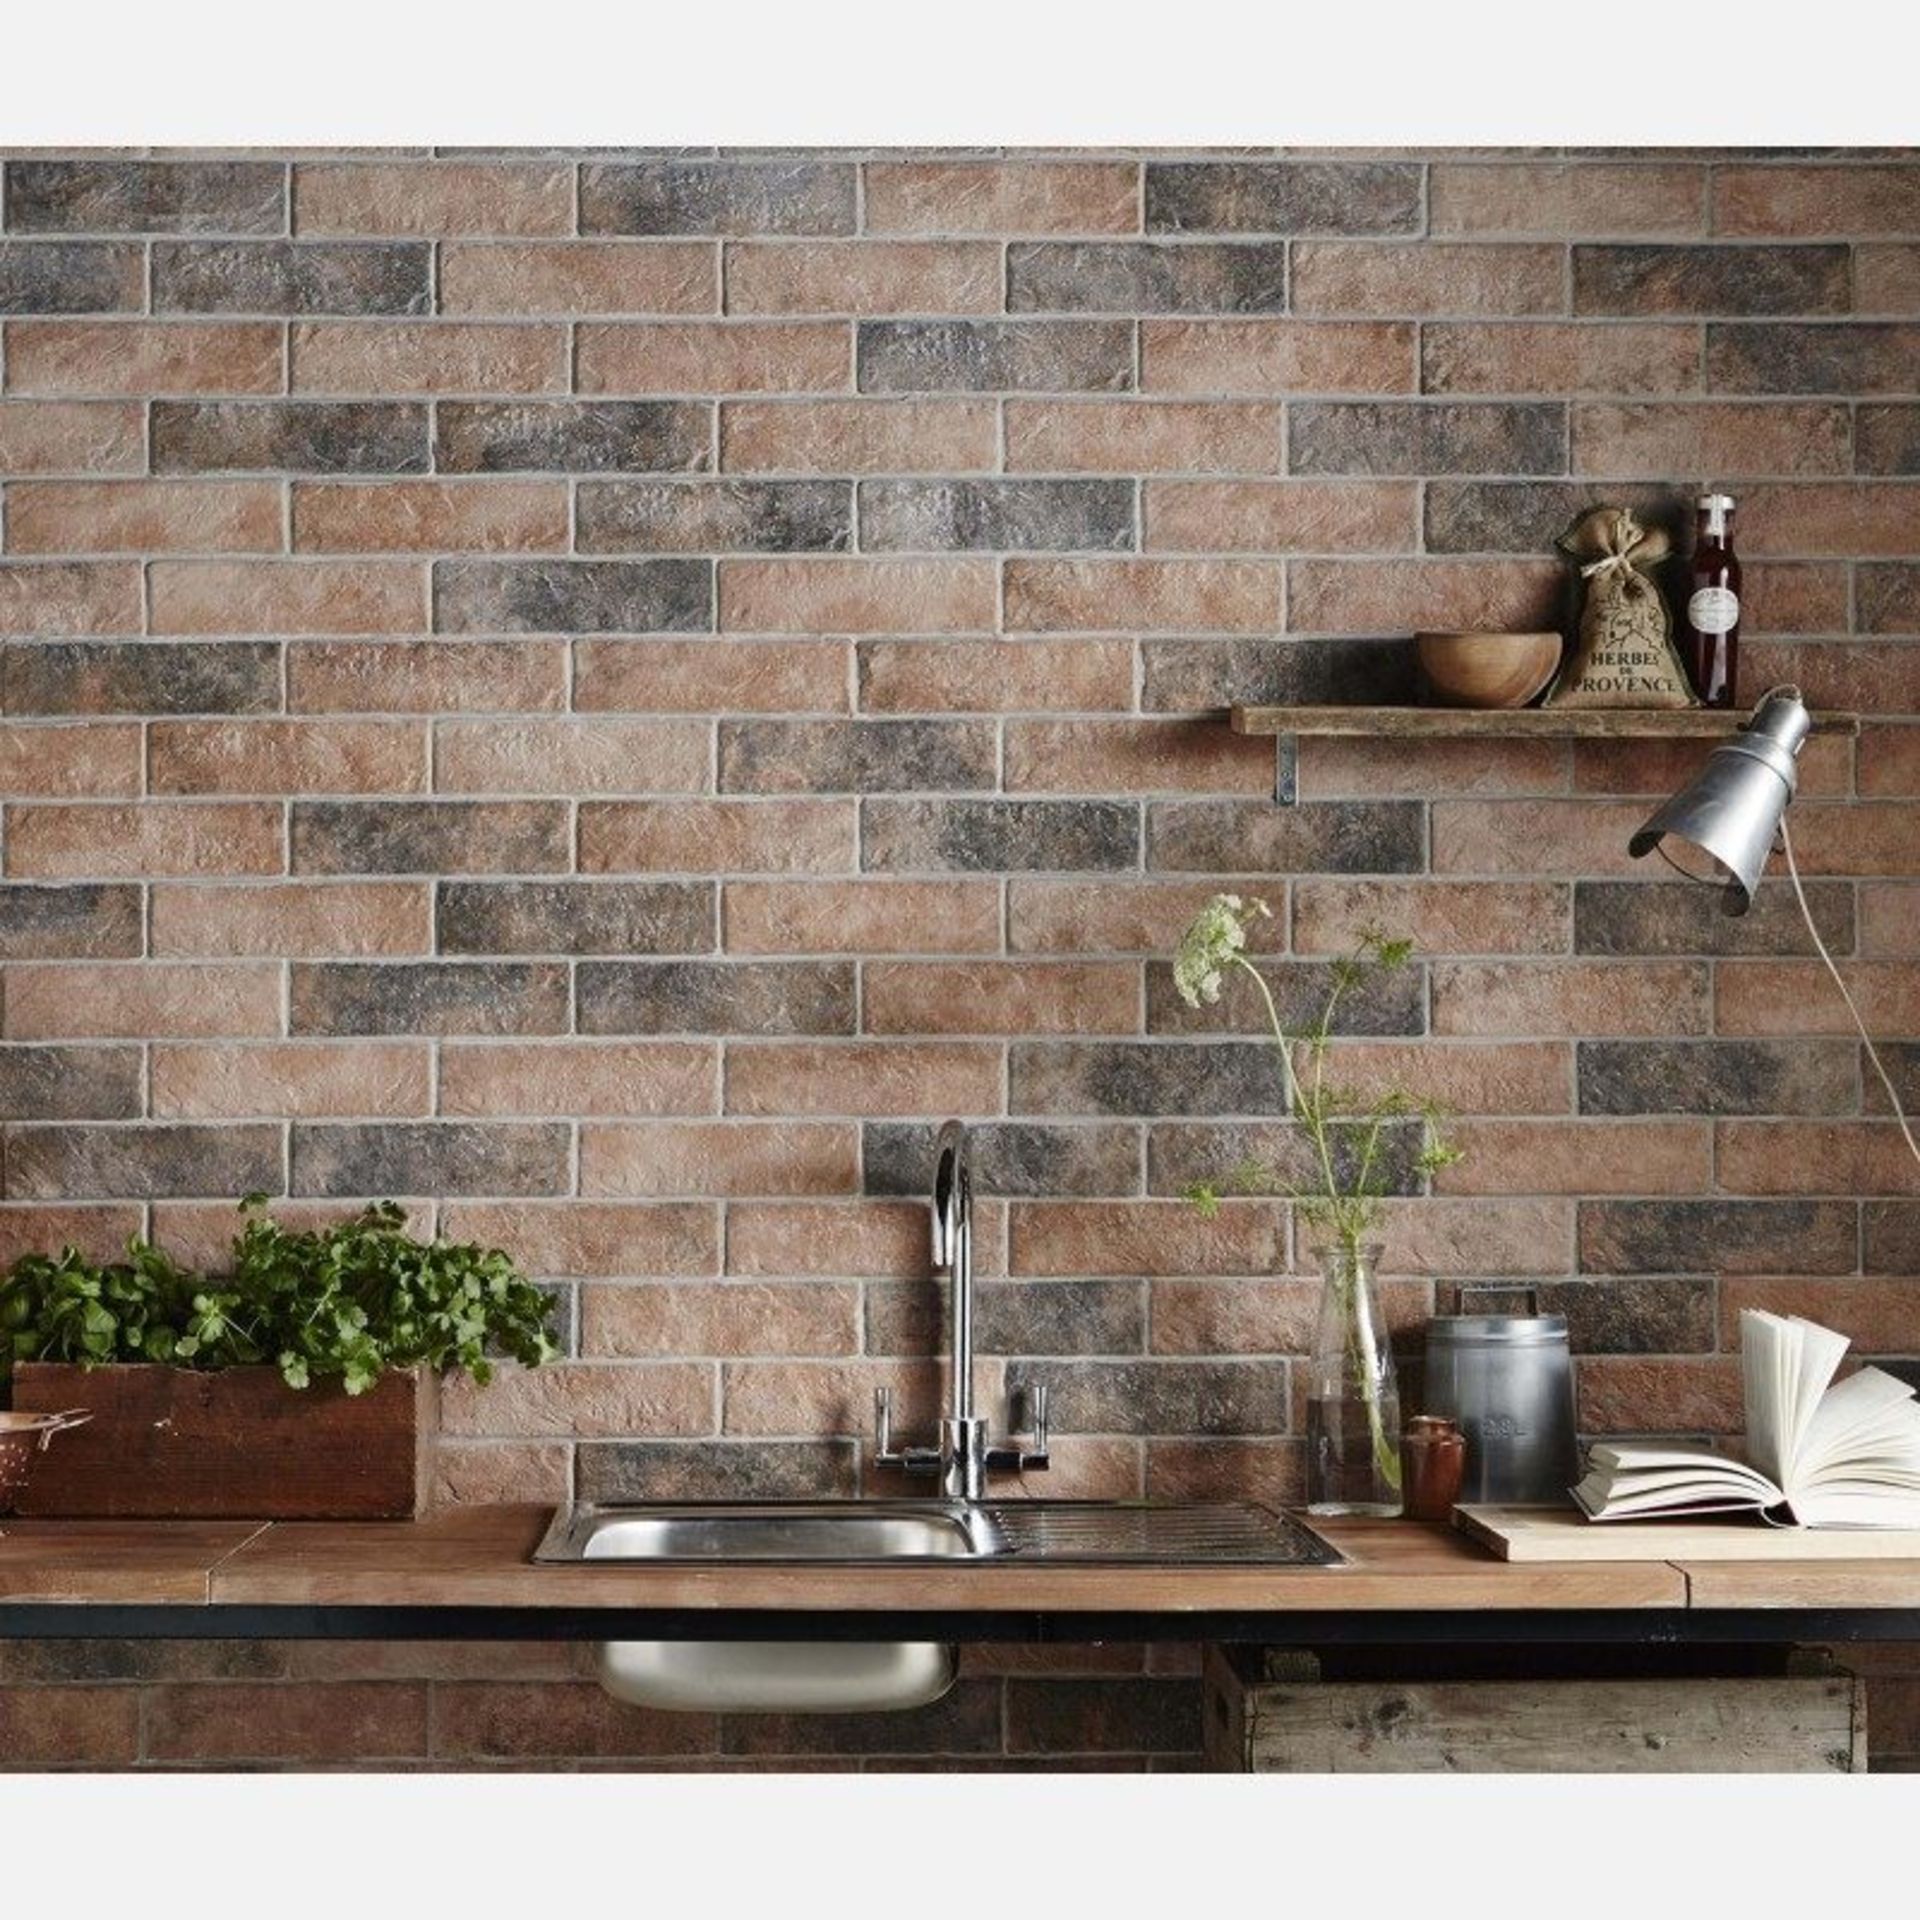 New 7.5M2 Brick Tile Rustic Ceramic Wall Tiles Carrelage Mural. 9.5mm Thickness, 250x500mm Per...